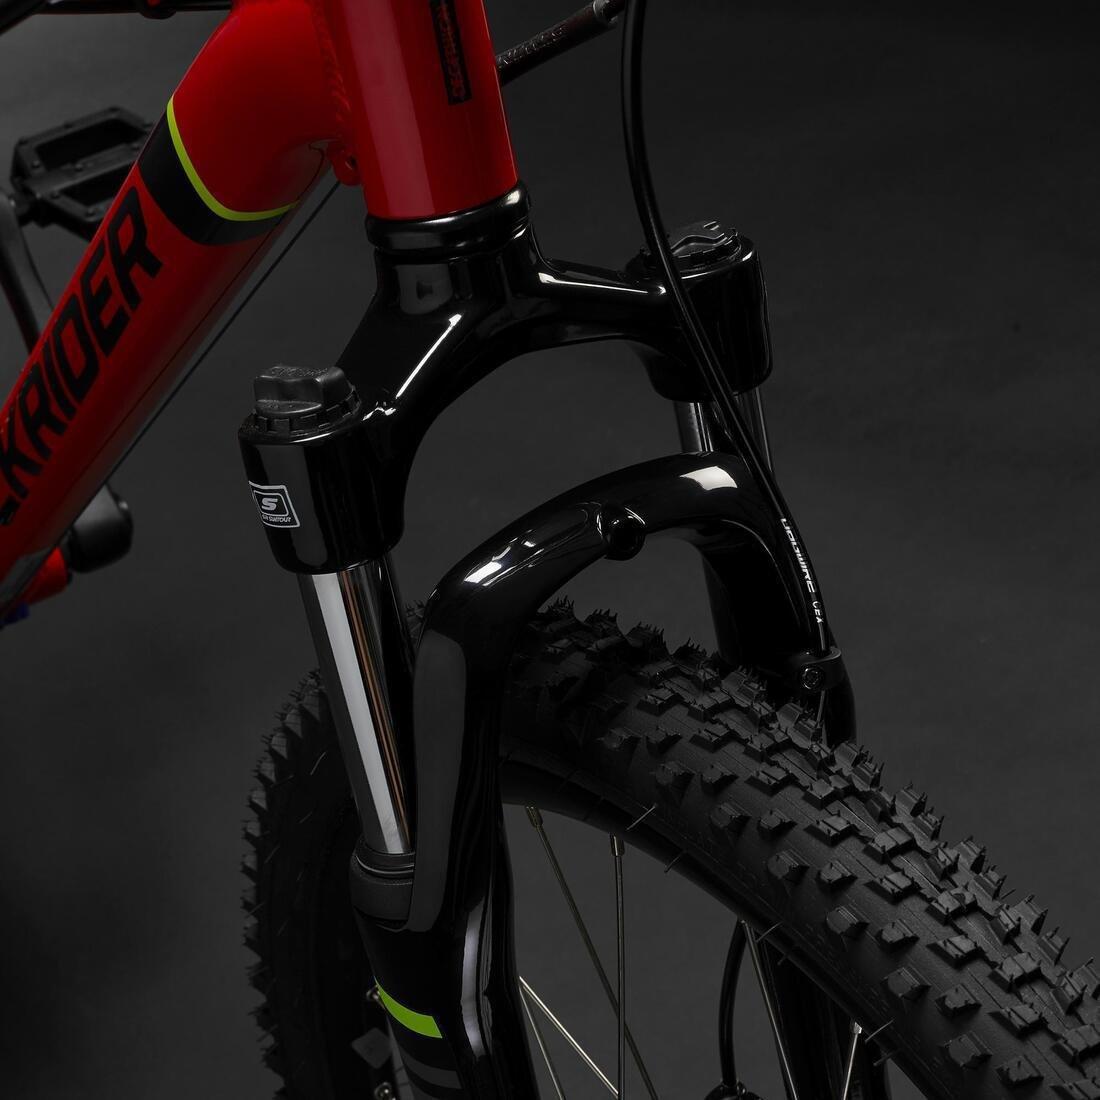 BTWIN - 24 Inch Kids Mountain bike Rockrider ST 900 Alluminium 9-12 Years old - Red, Scarlet red